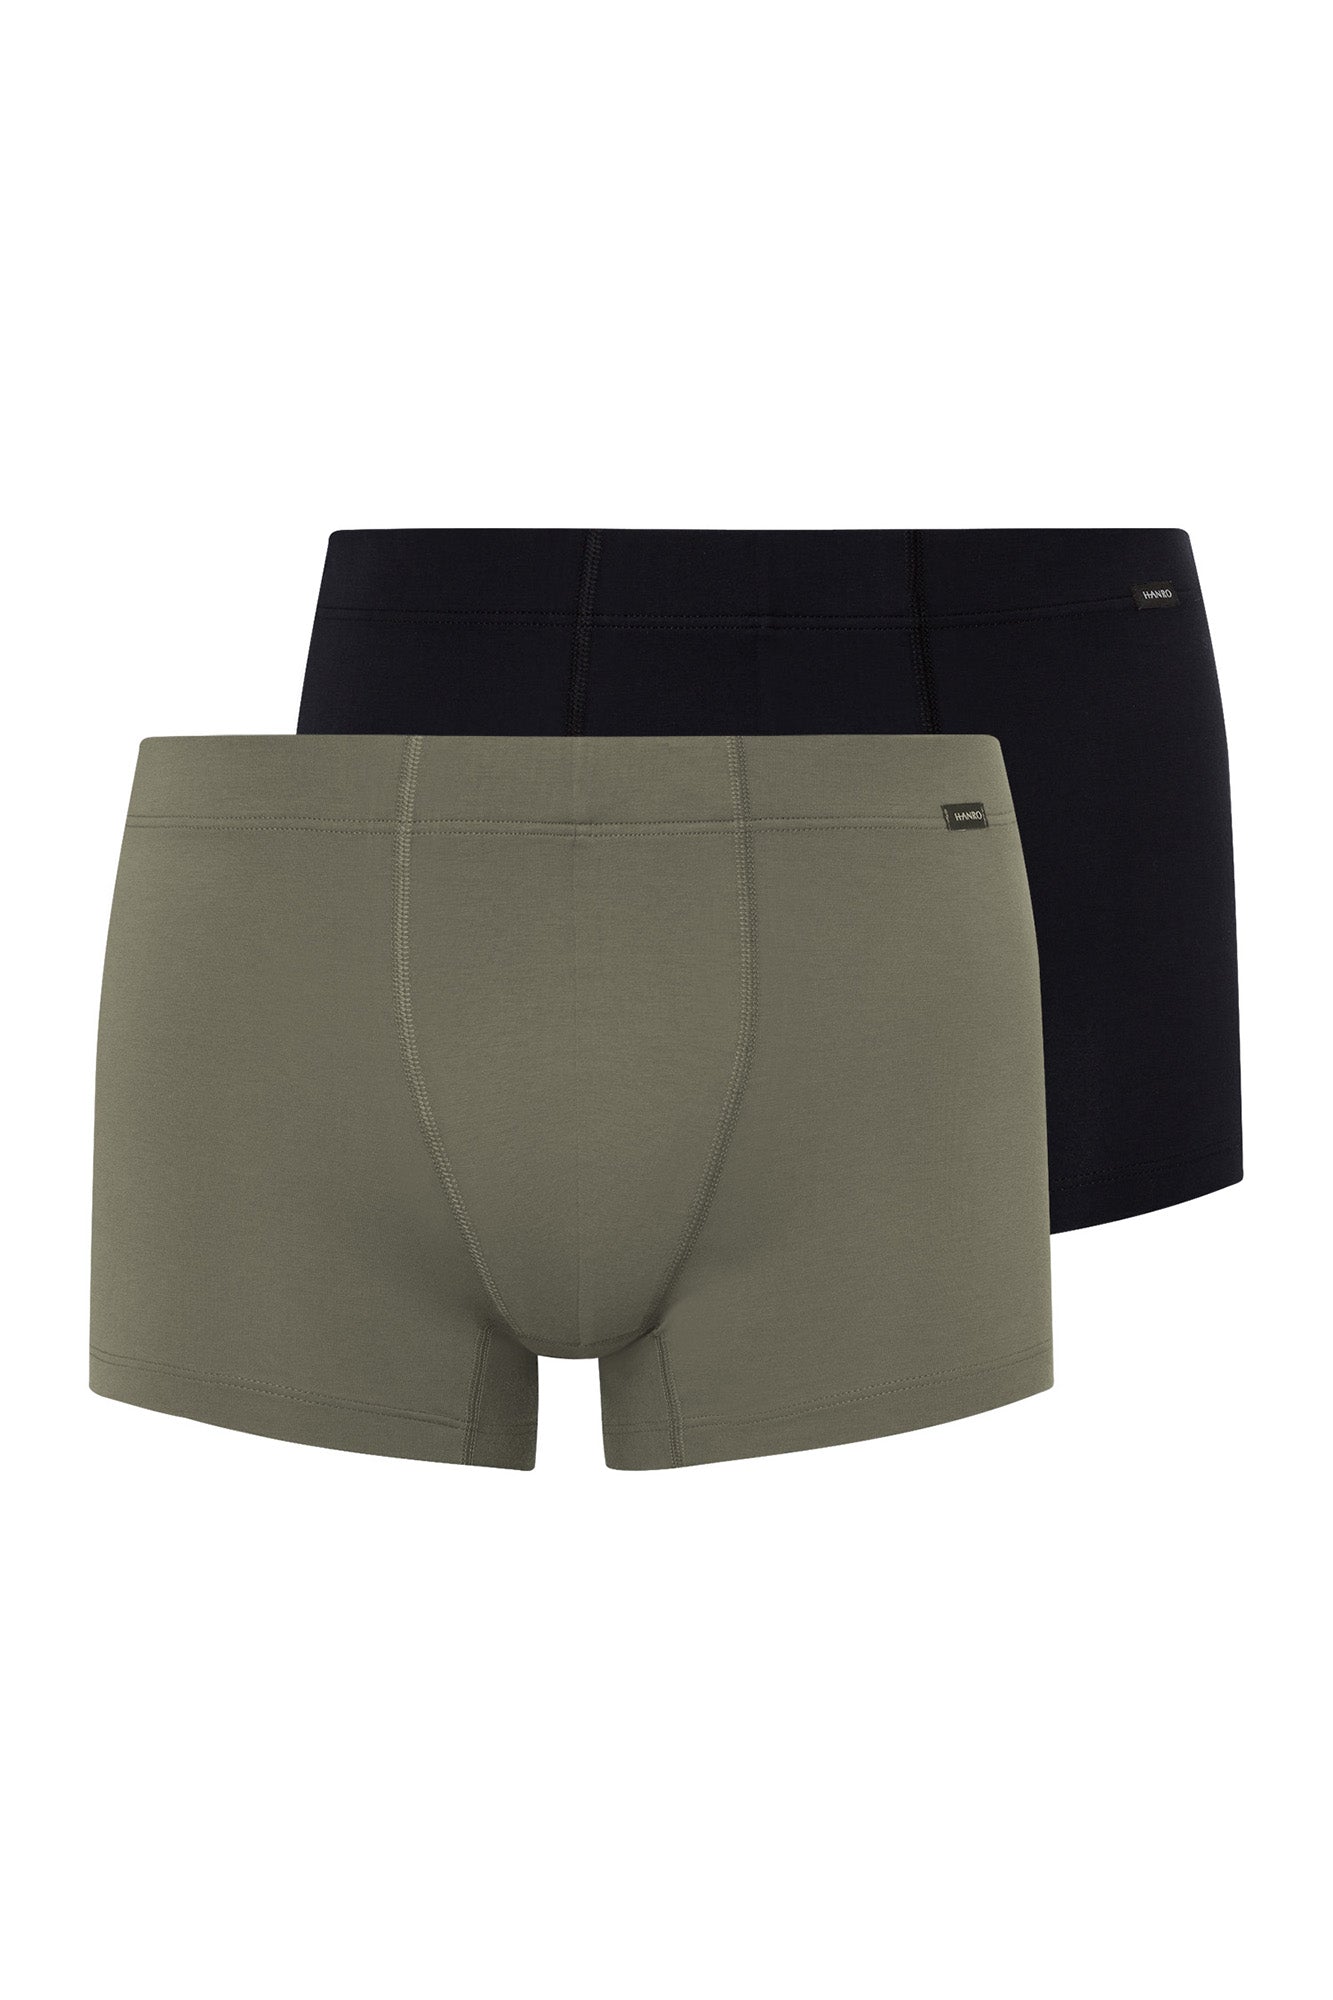 HANRO Cotton Essentials - Pants 2Pack